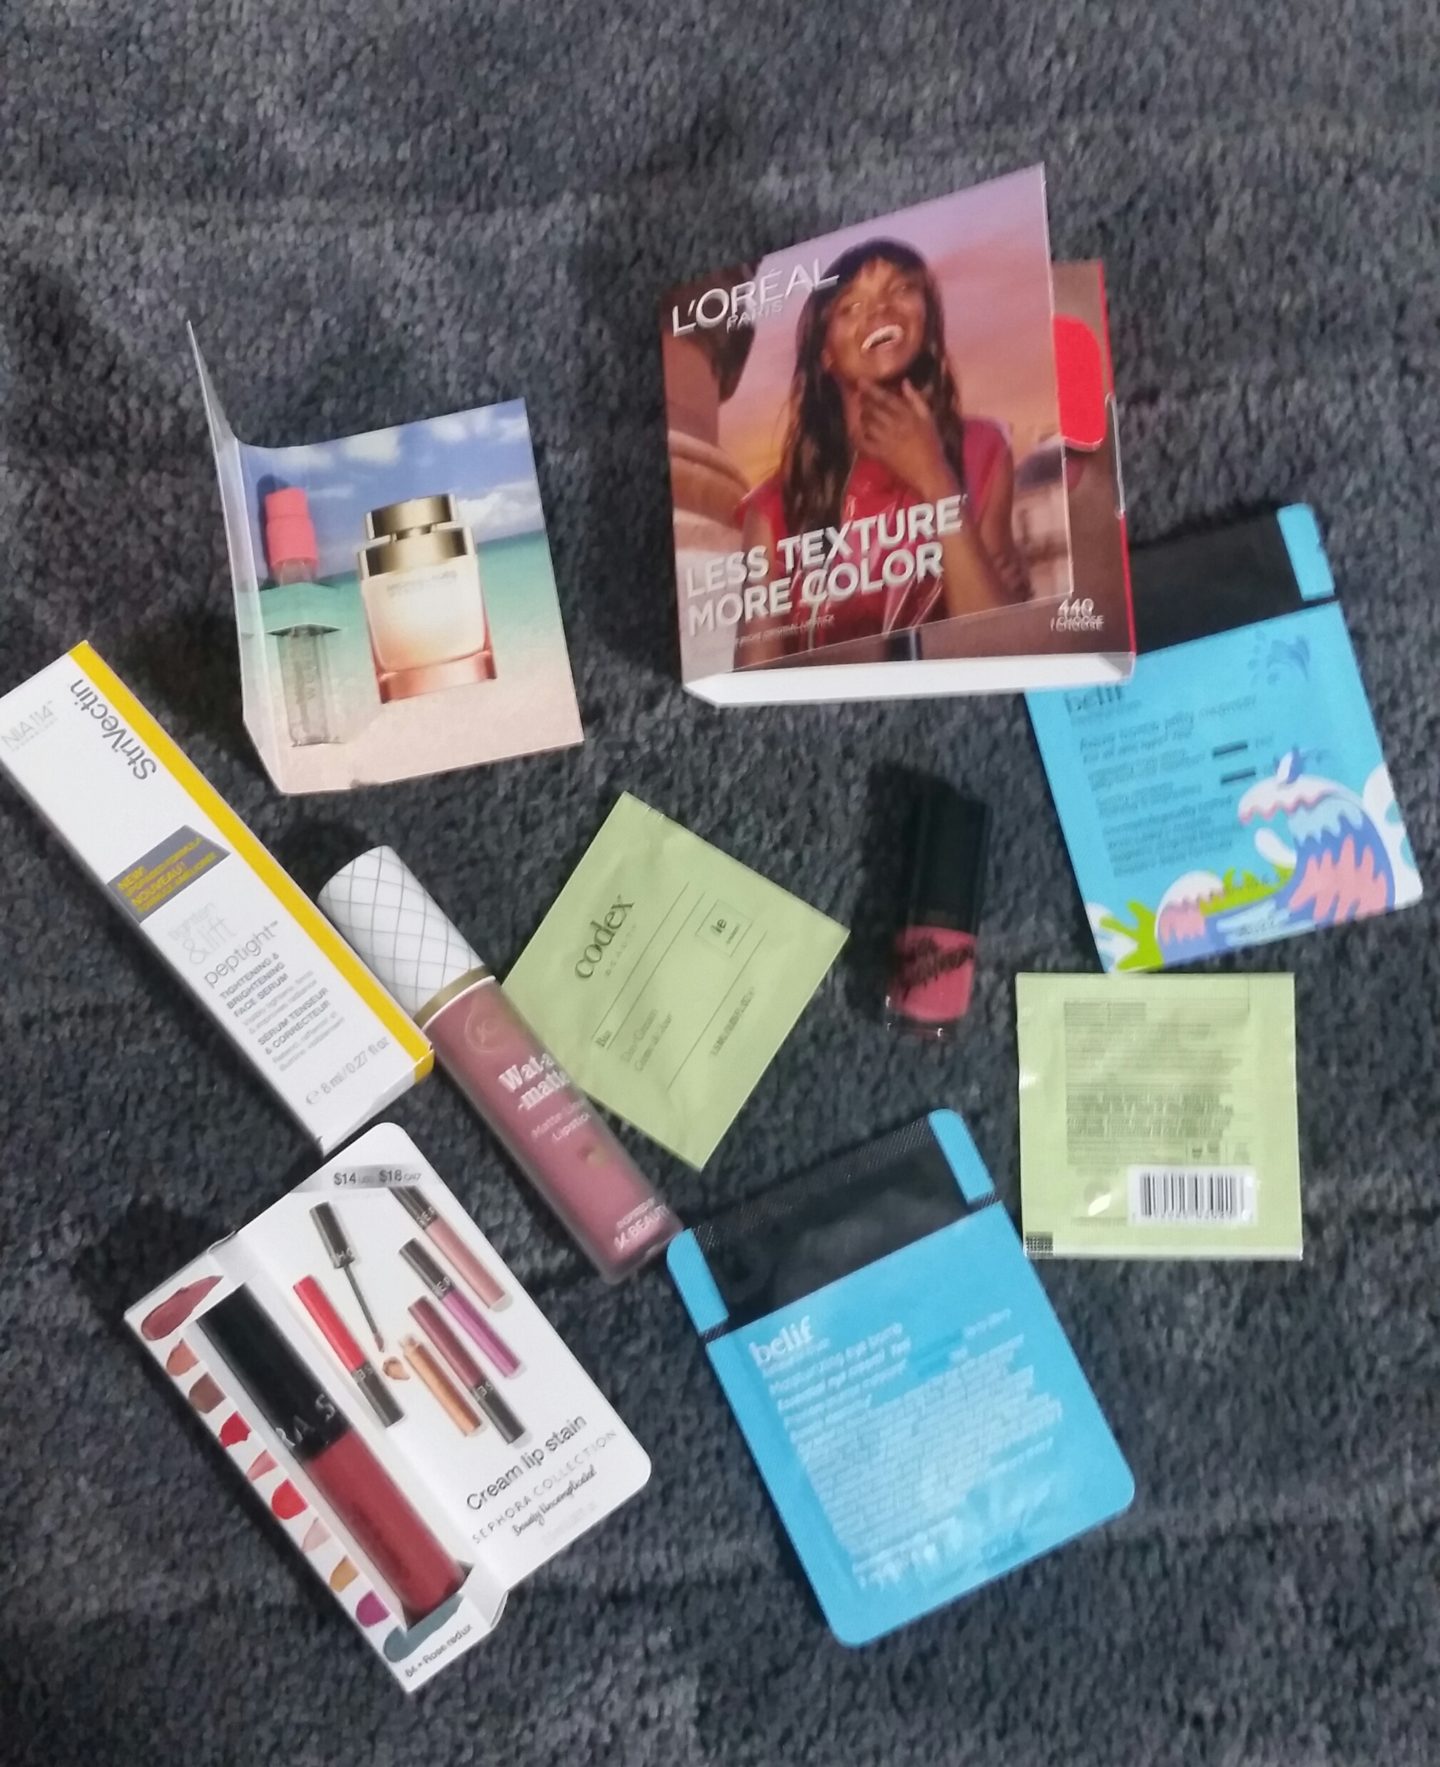 skincare, lipstick and perfume samples